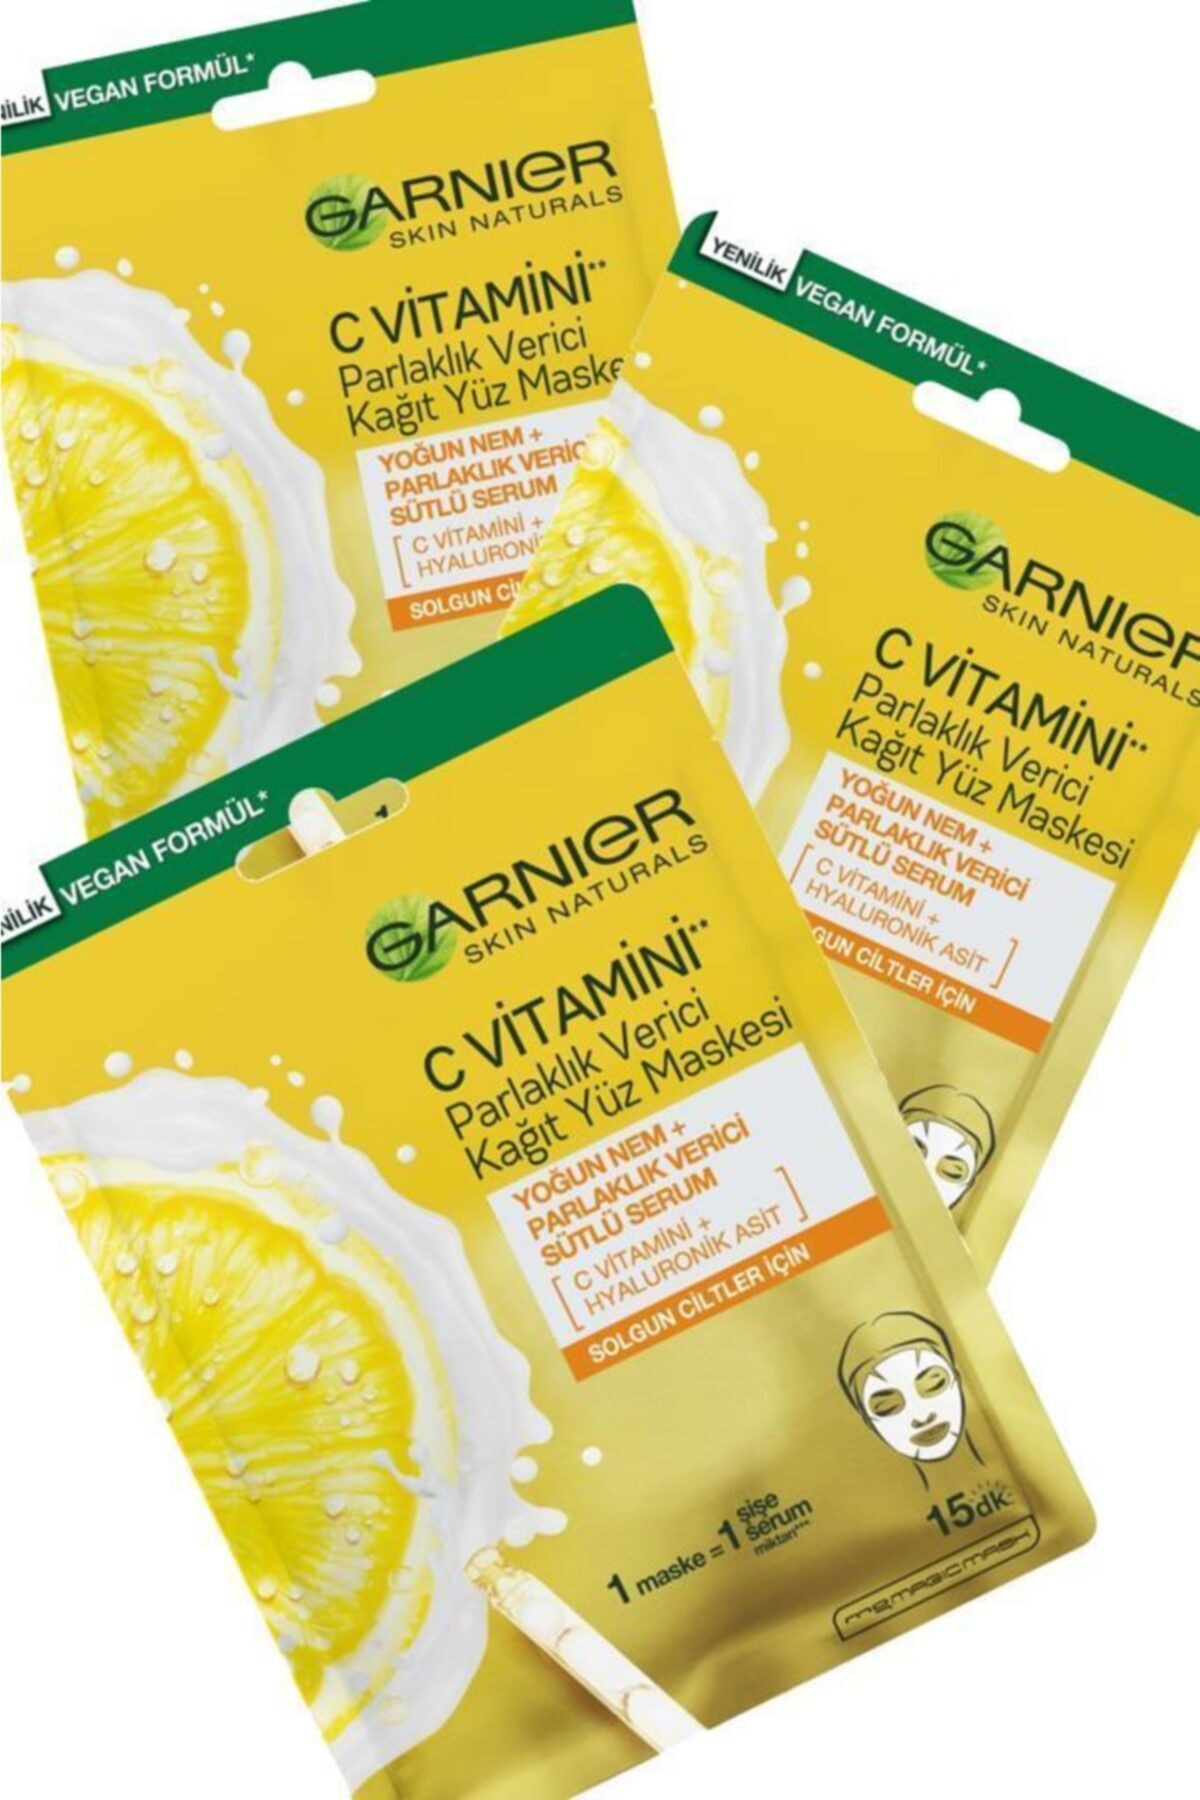 Garnier Skın Naturals Parlaklık Verici C Vitamini Maske Seti